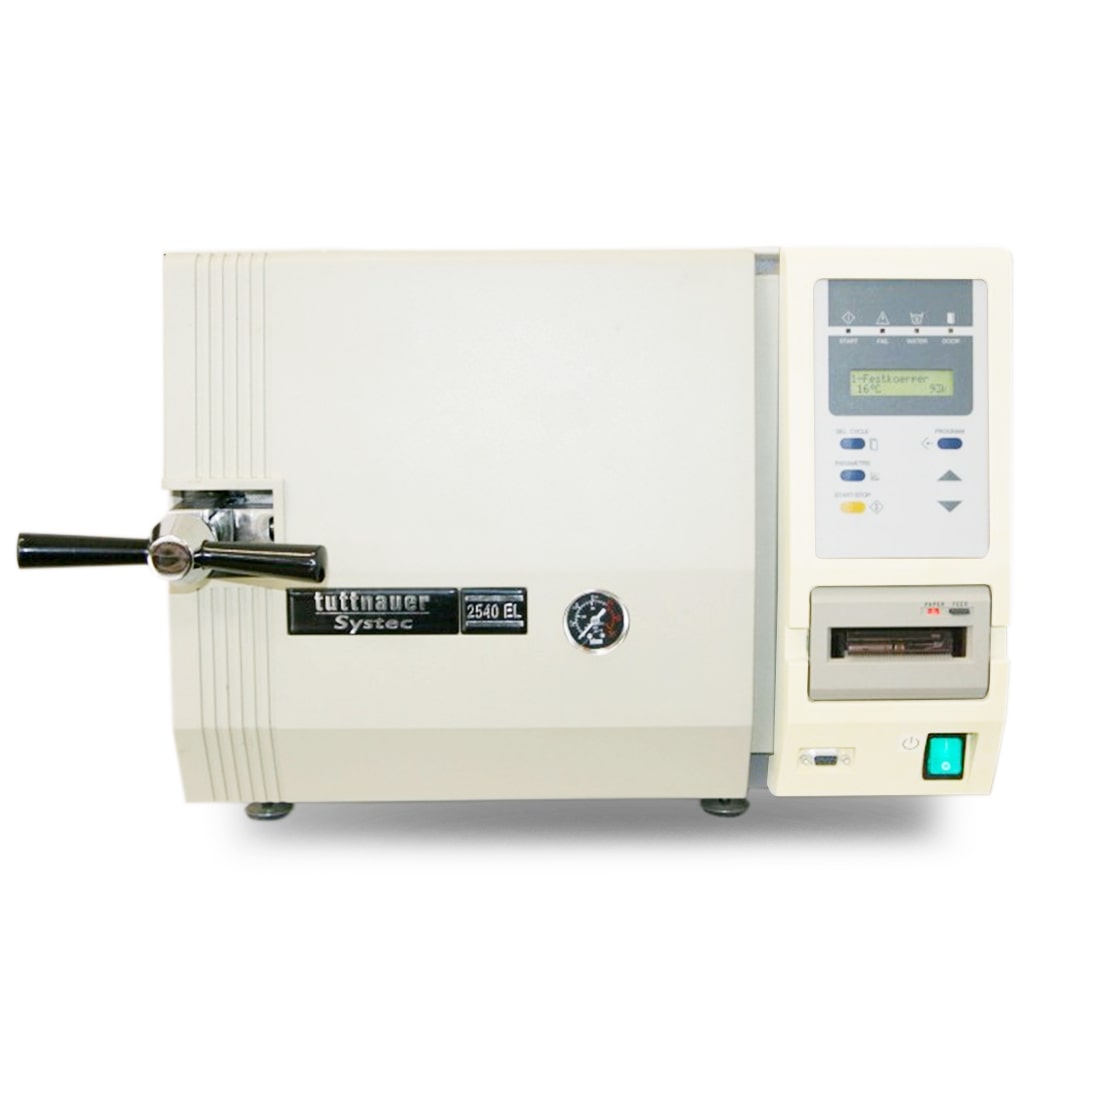 Tuttnauer 2540EL - Autoclave Automatic Sterilizer